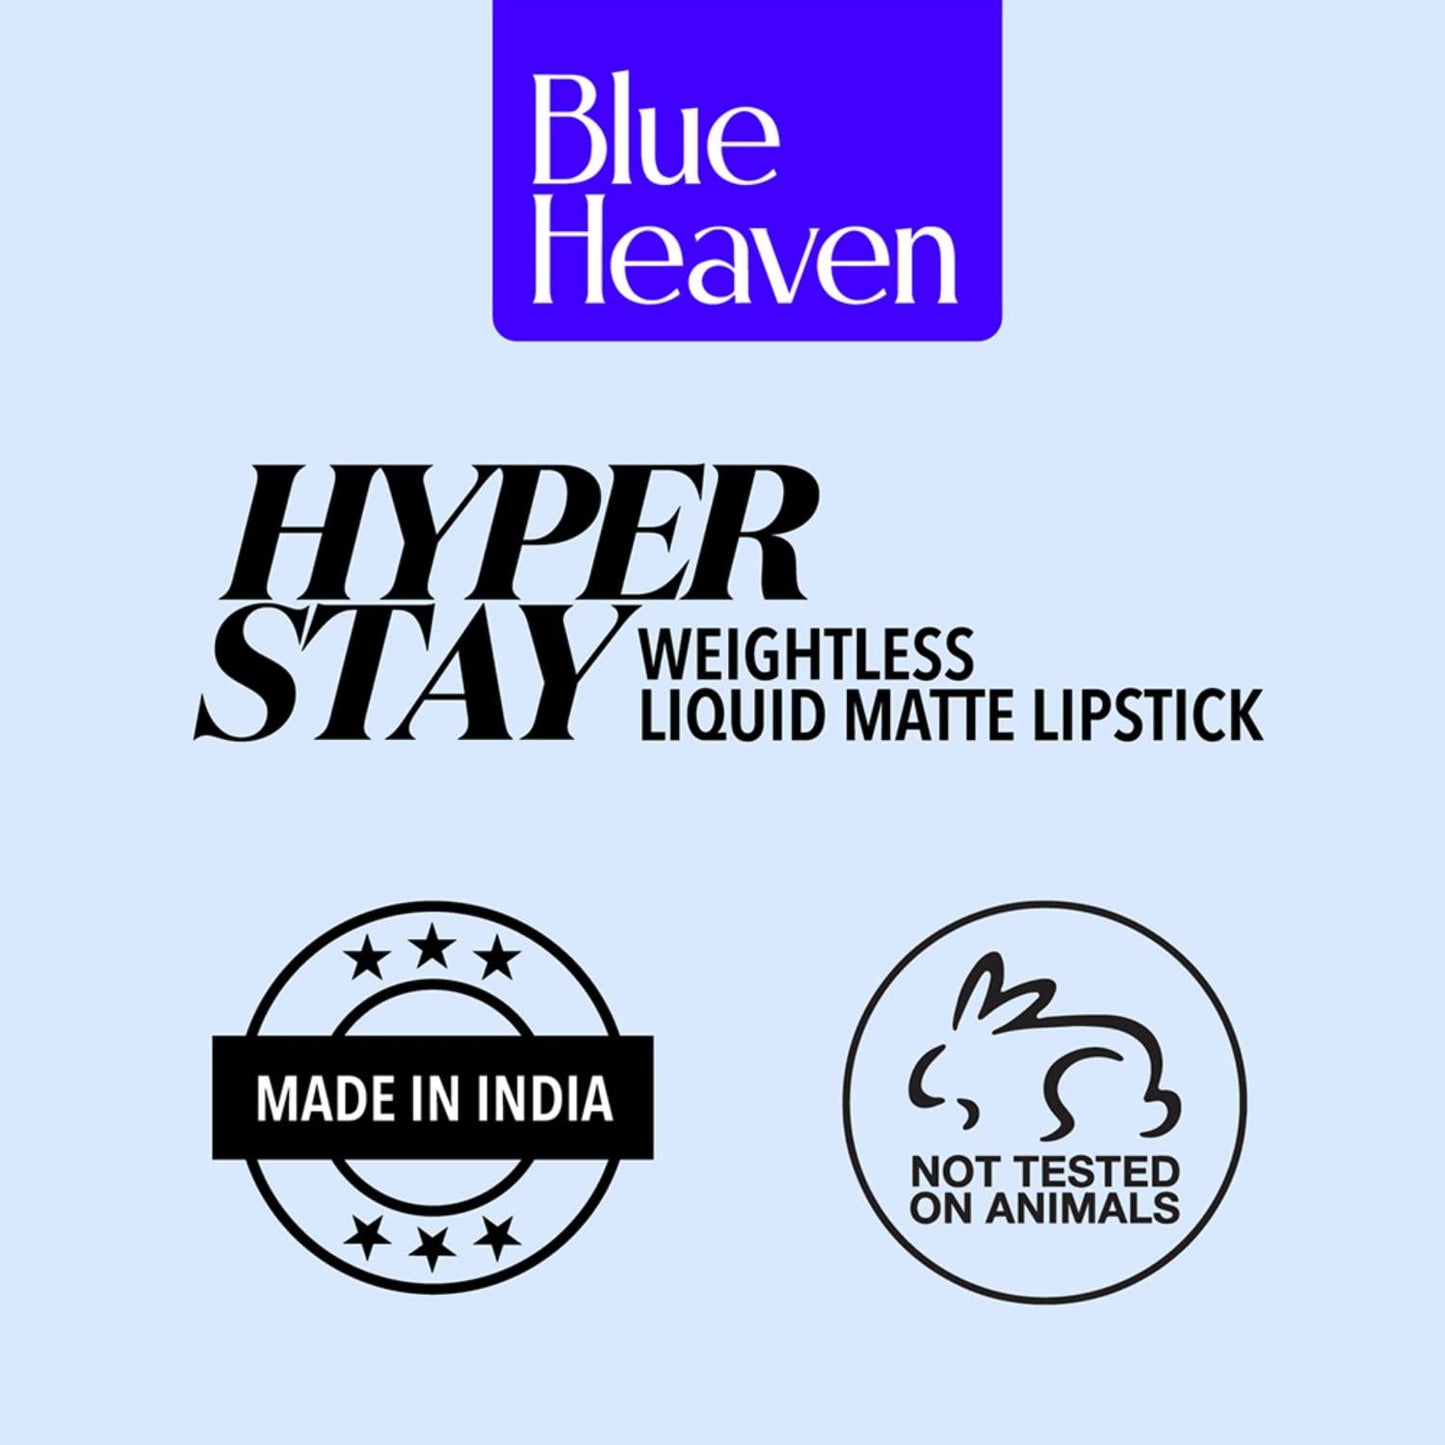 Blue Heaven Hyperstay Weightless Liquid Matte Lipstick, Smudgeproof, Transfer proof, Bewitching Red, 6ml